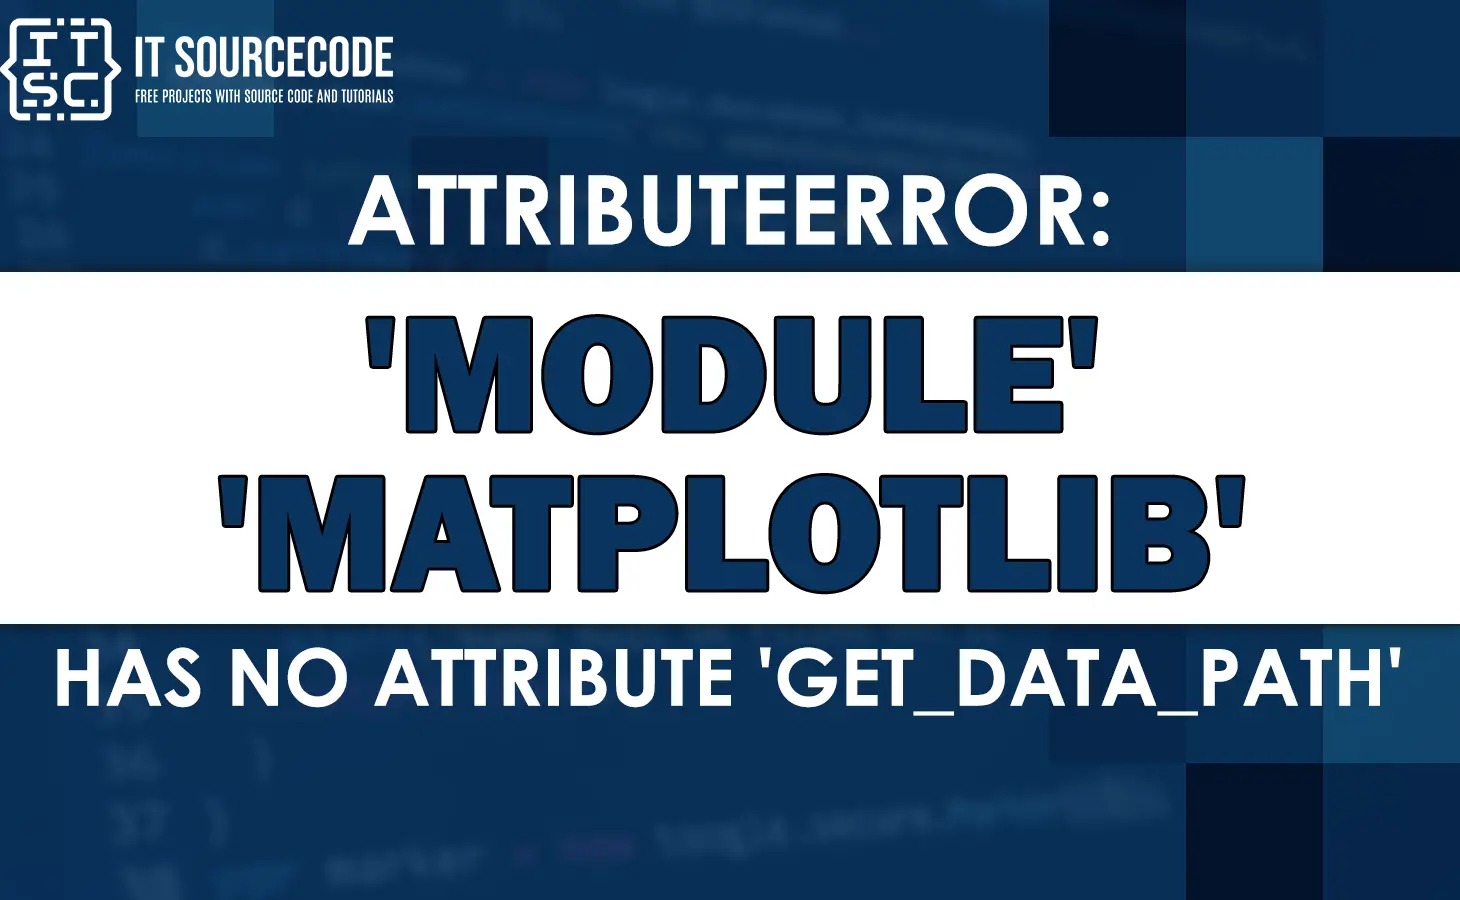 attributeerror: module matplotlib has no attribute get_data_path